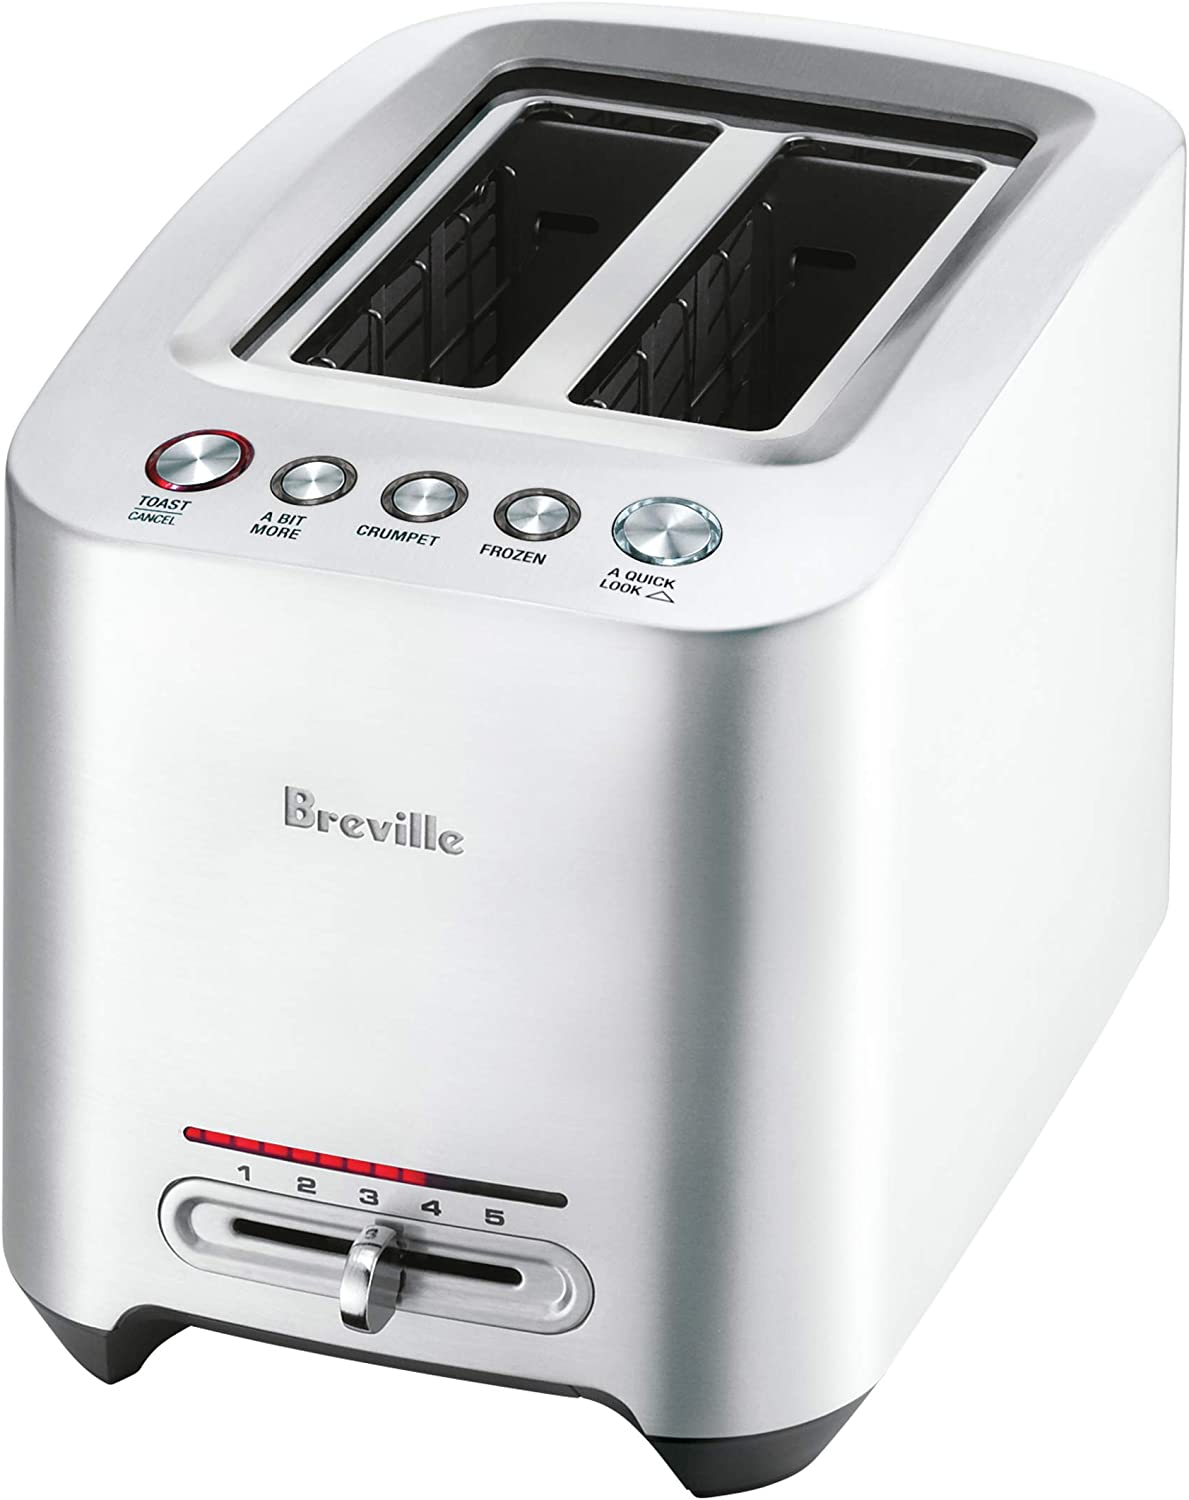 Breville Motorized Smart Toaster BTA830XL Overview